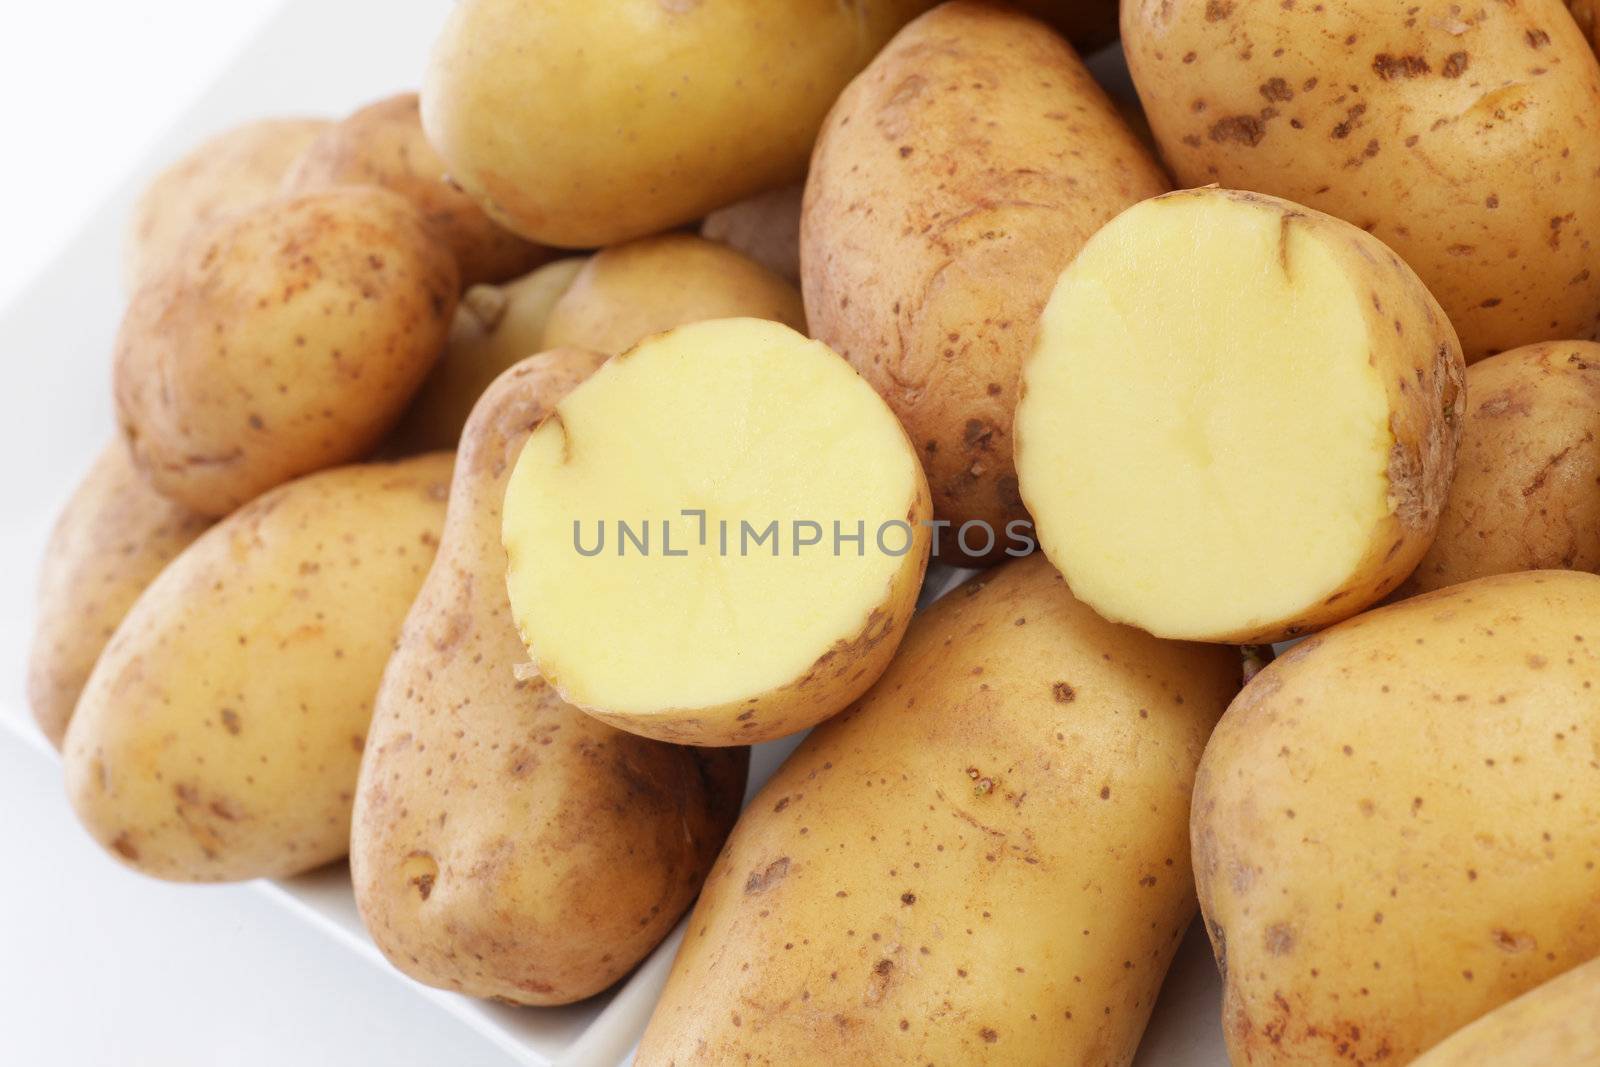 Market display of fresh potatoes by Farina6000